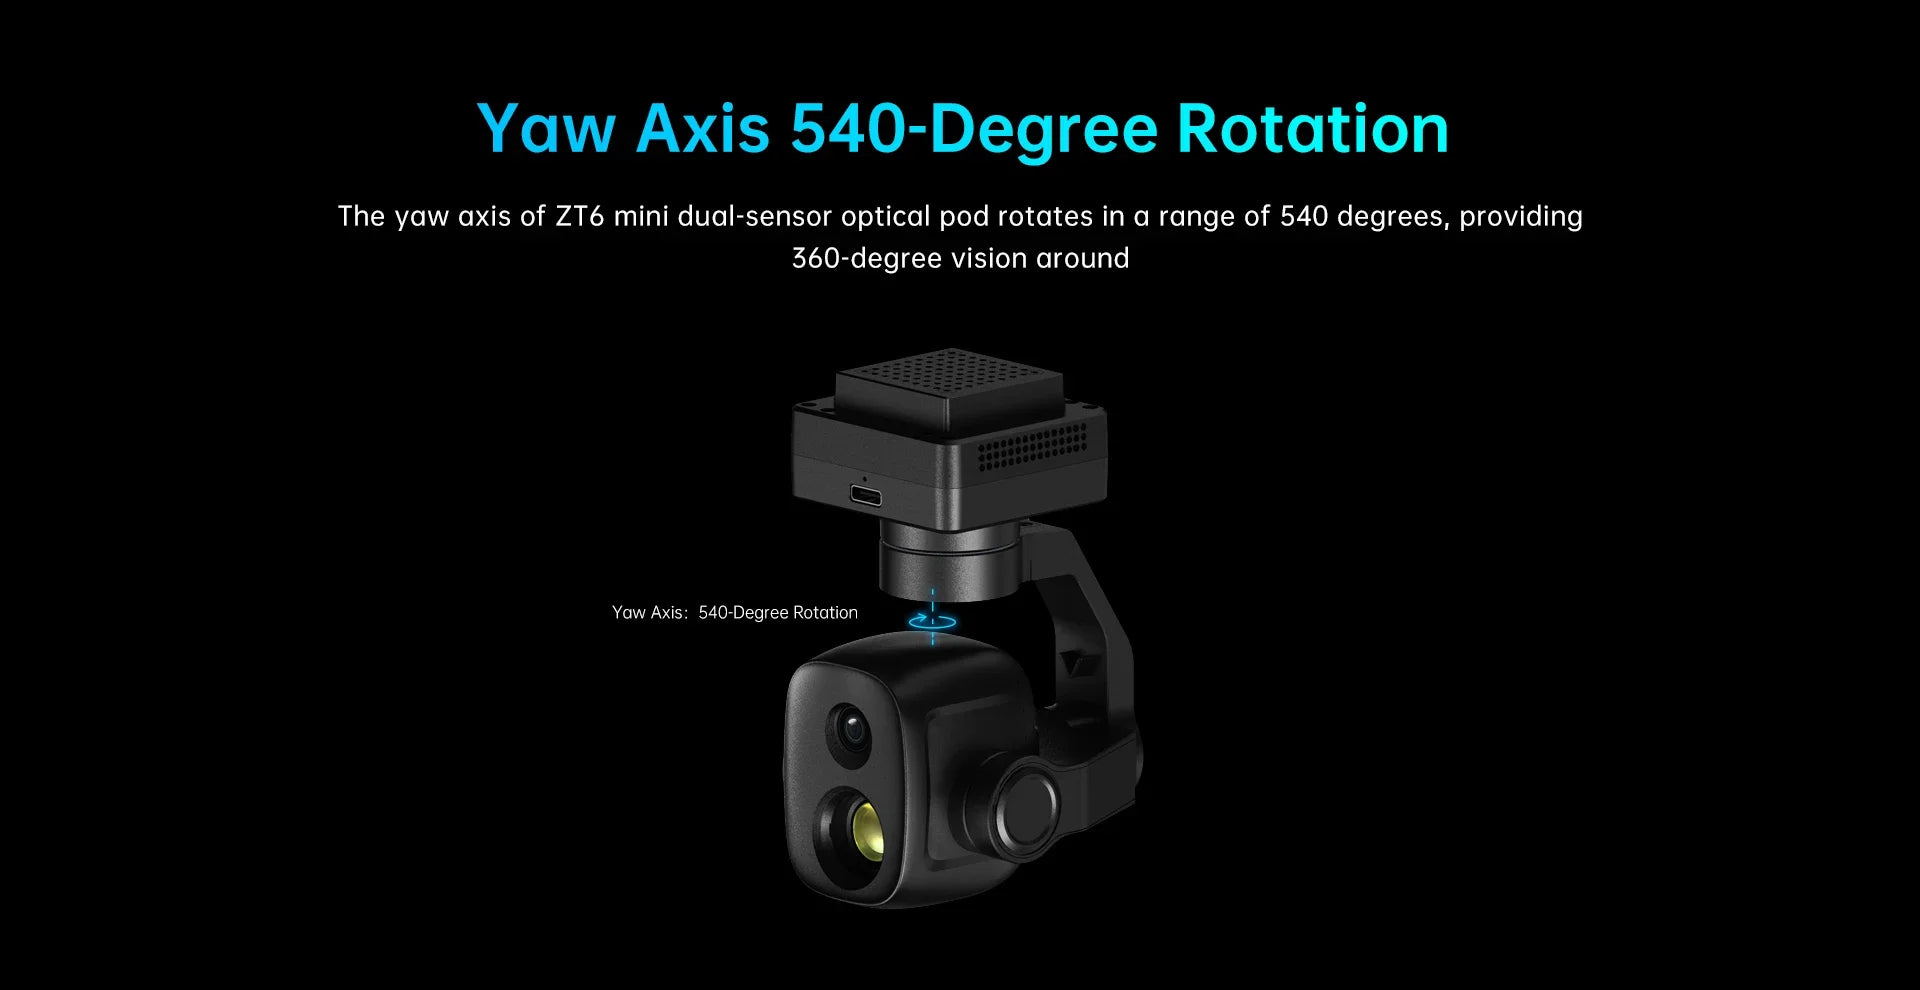 SIYI ZT6 Mini Dual Sensor Optical Pod, Panoramic views with 360-degree rotation on ZT6's yaw axis.